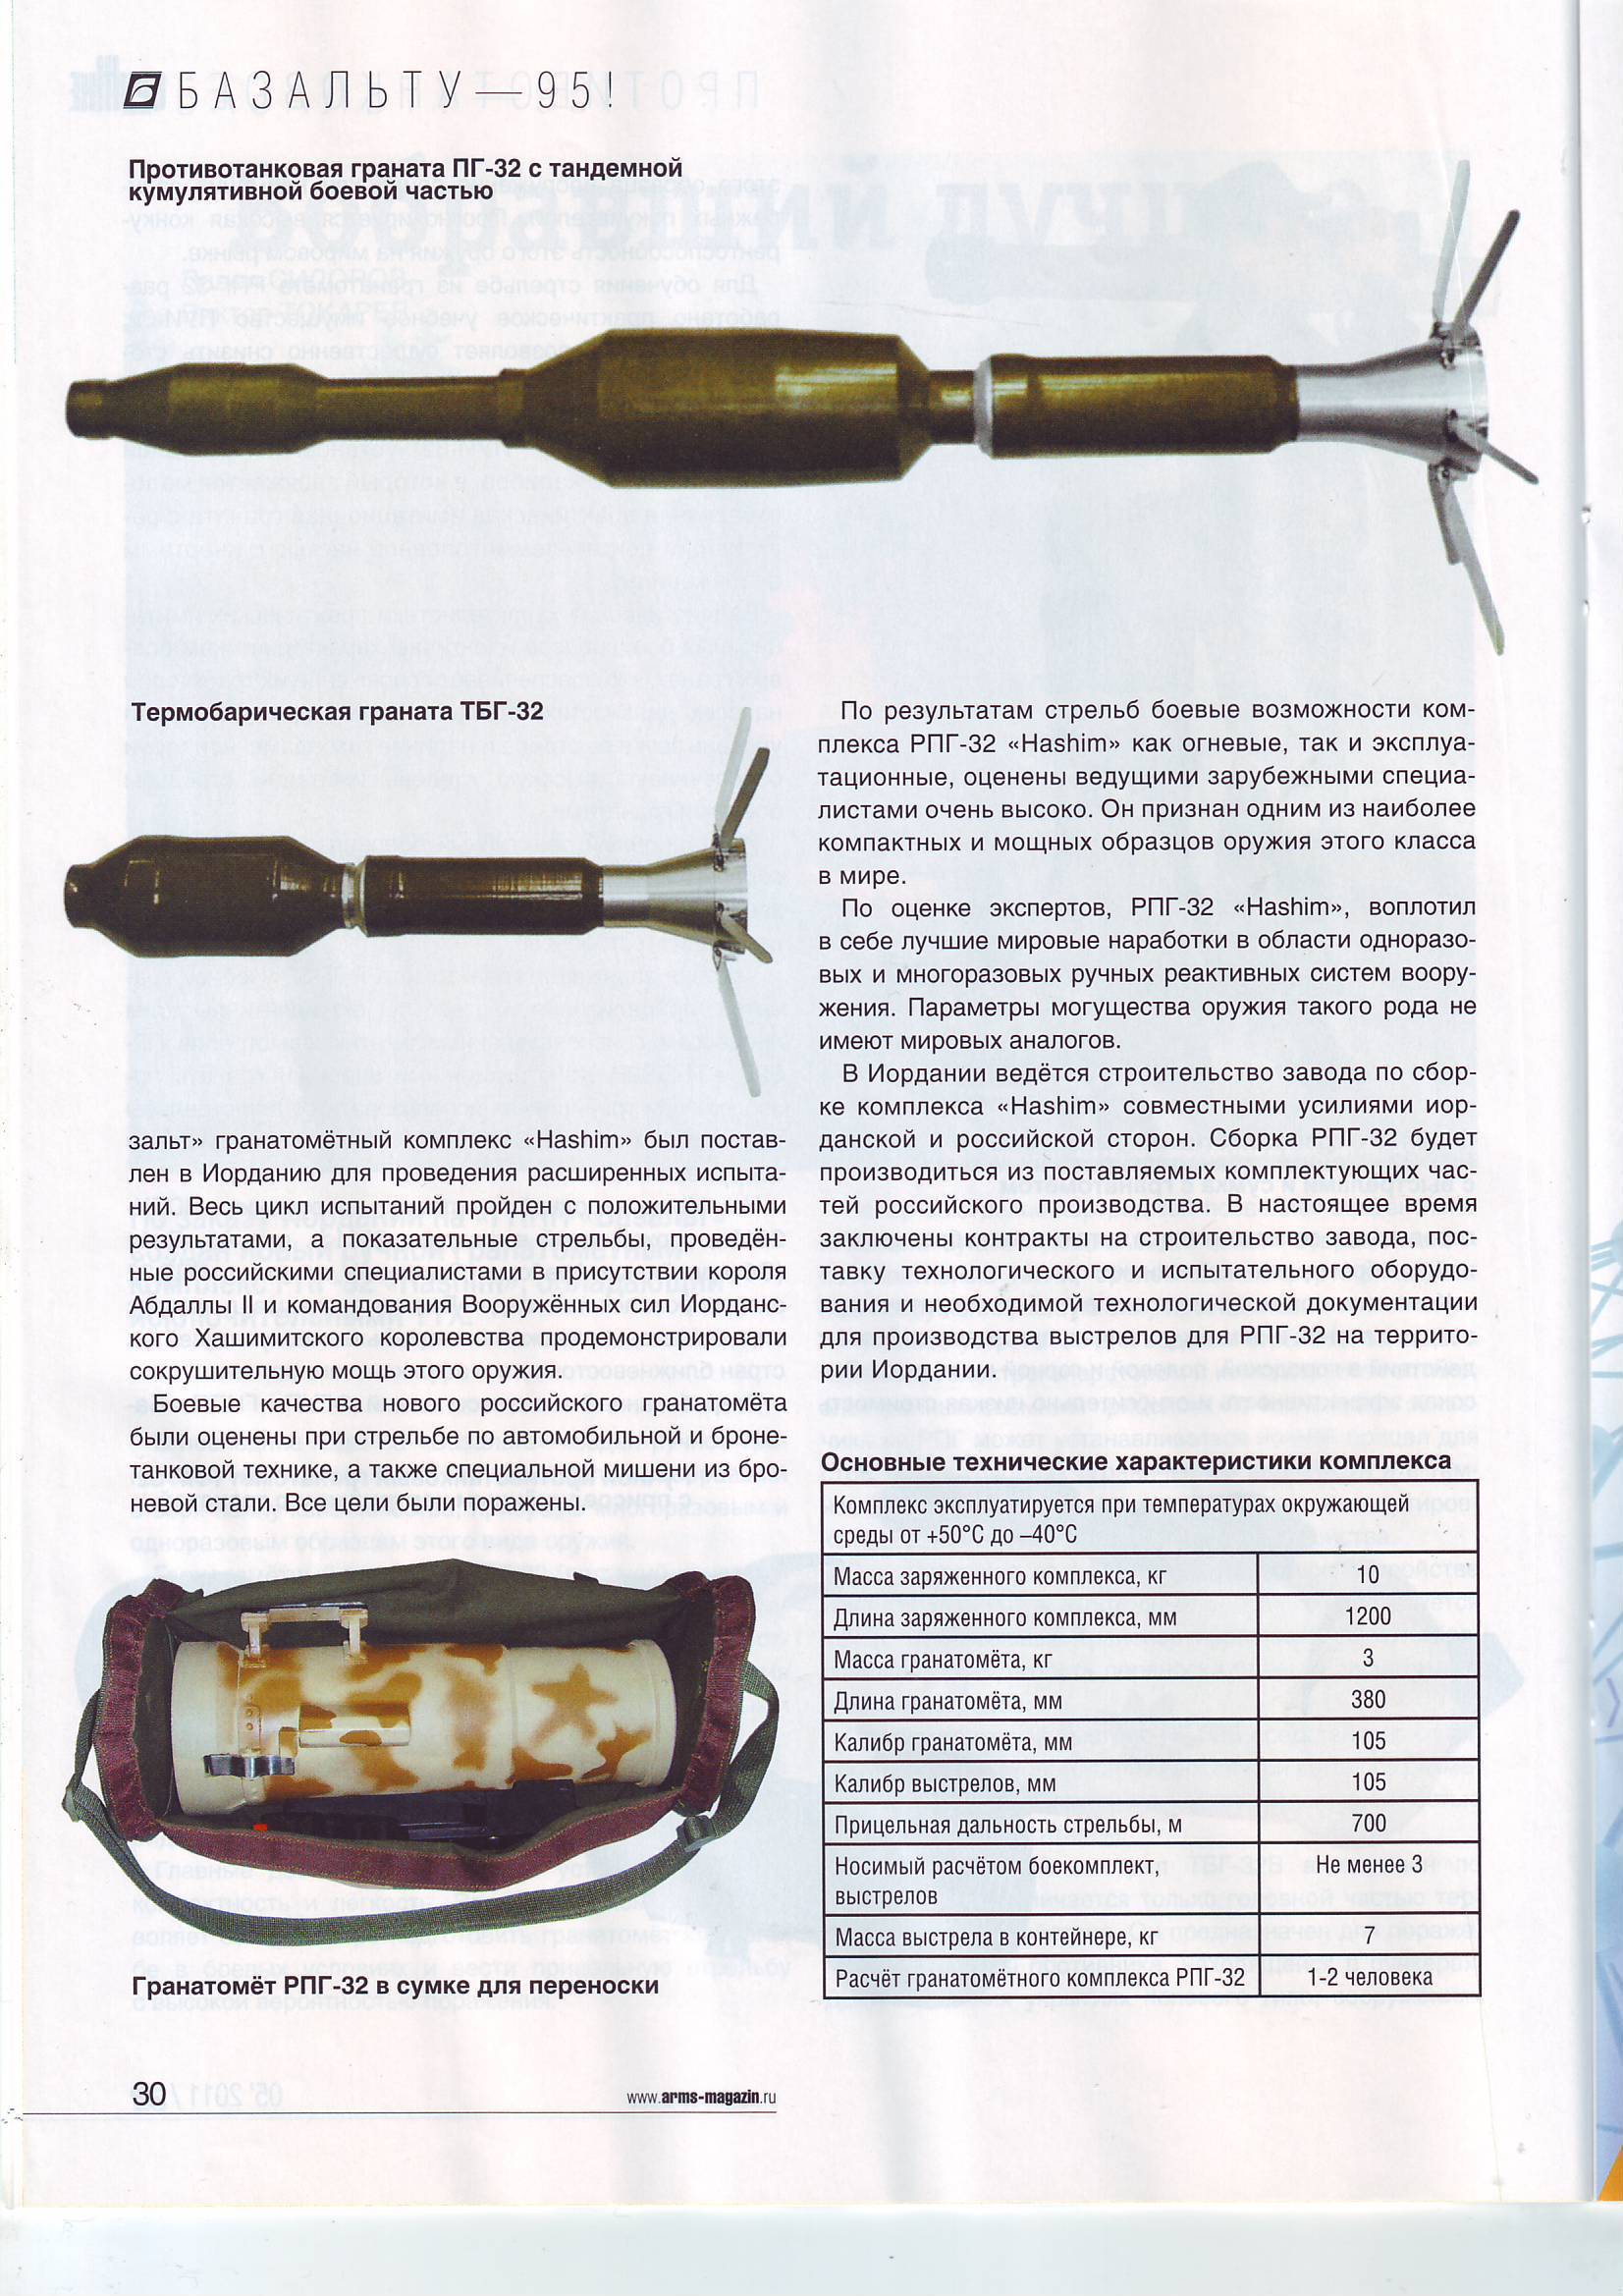 Гранатомет рпг-32. фото. видео. ттх. устройство